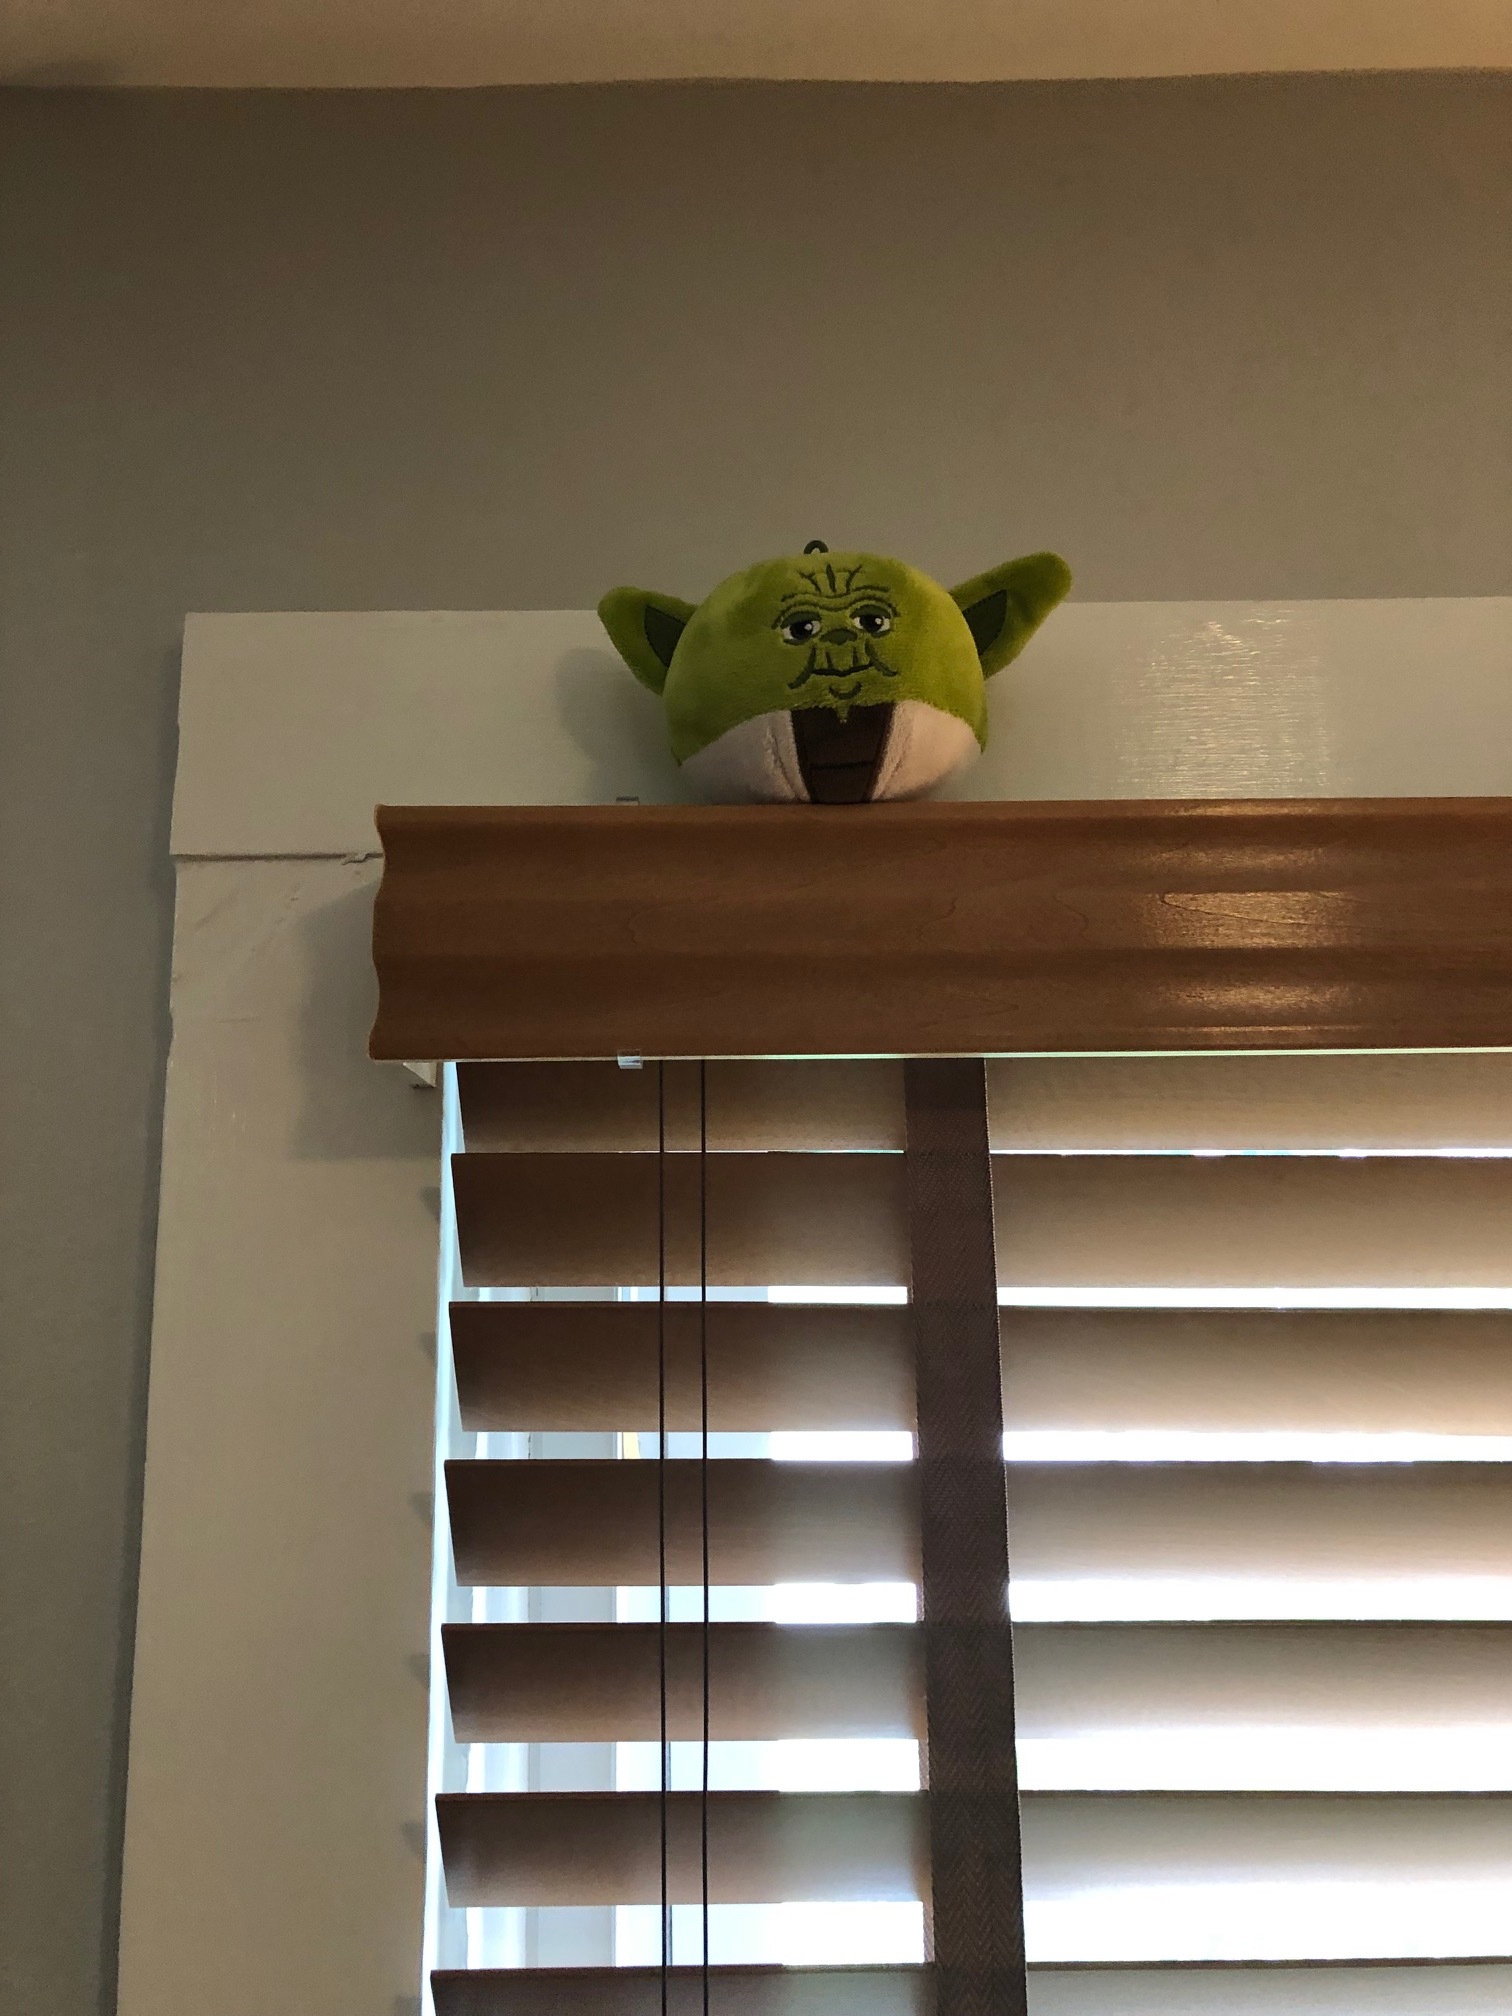 Yoda over a window